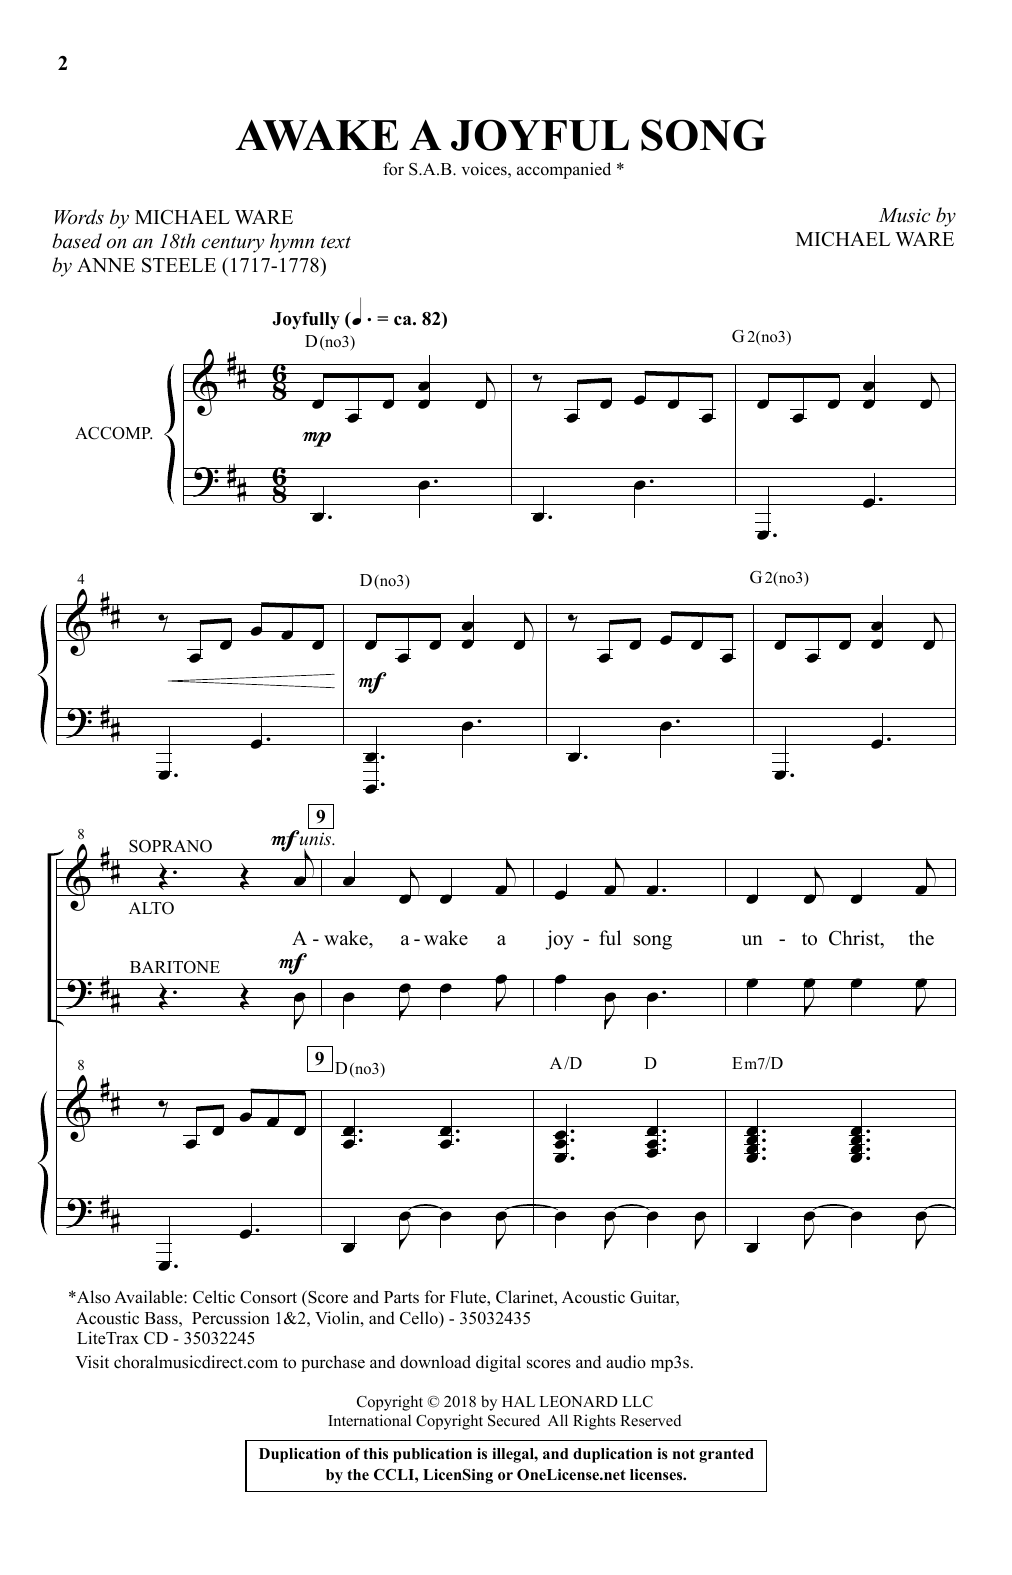 Michael Ware Awake A Joyful Song Sheet Music Notes & Chords for SAB Choir - Download or Print PDF